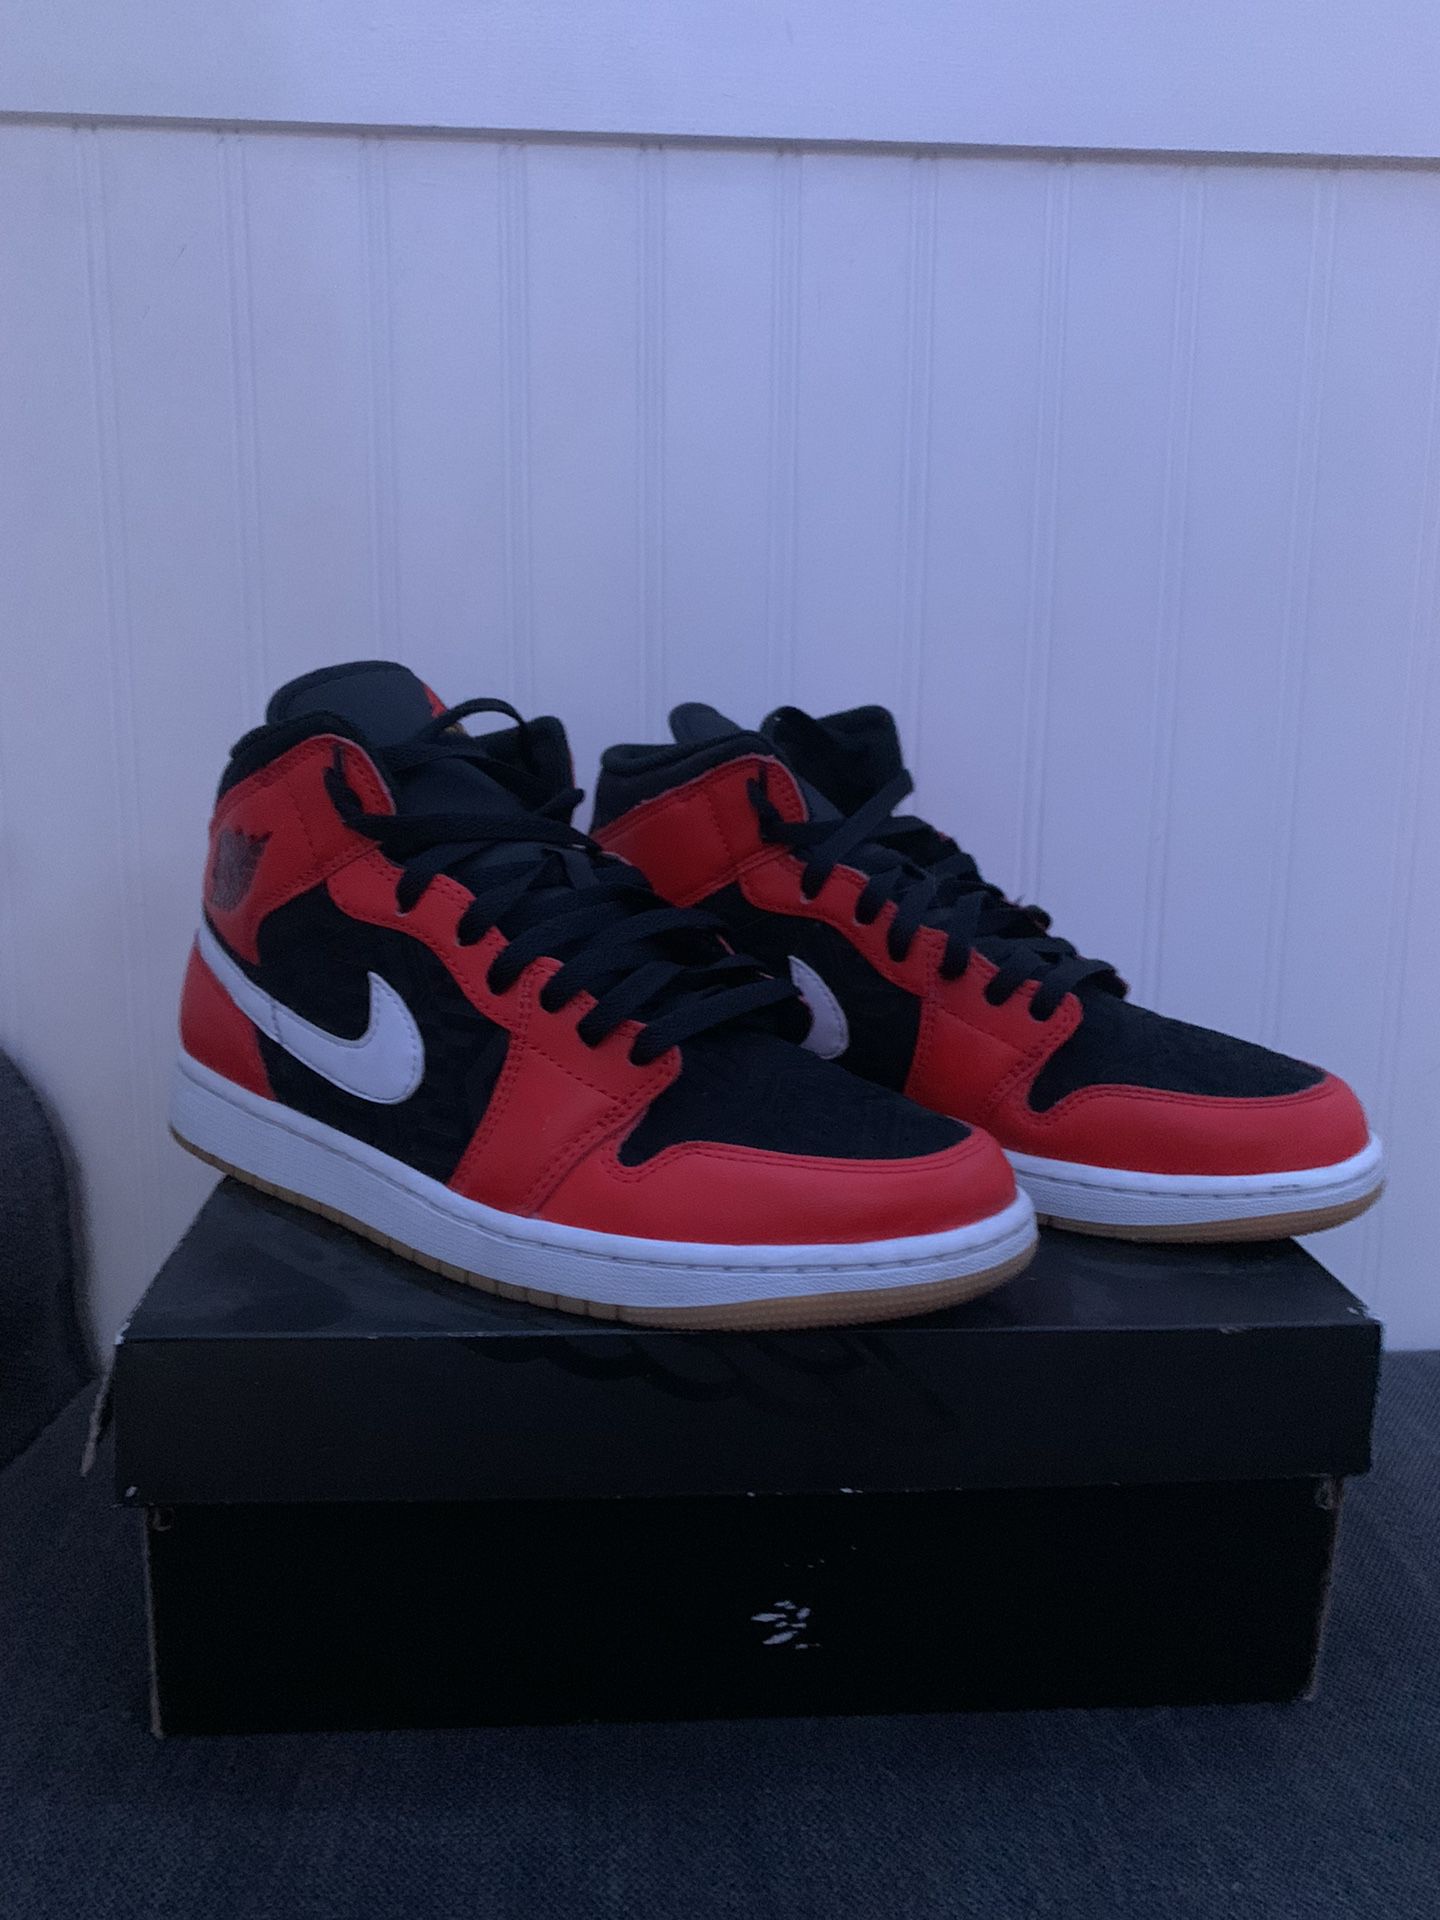 Used Air Jordan 1 “Christmas”  Size 9